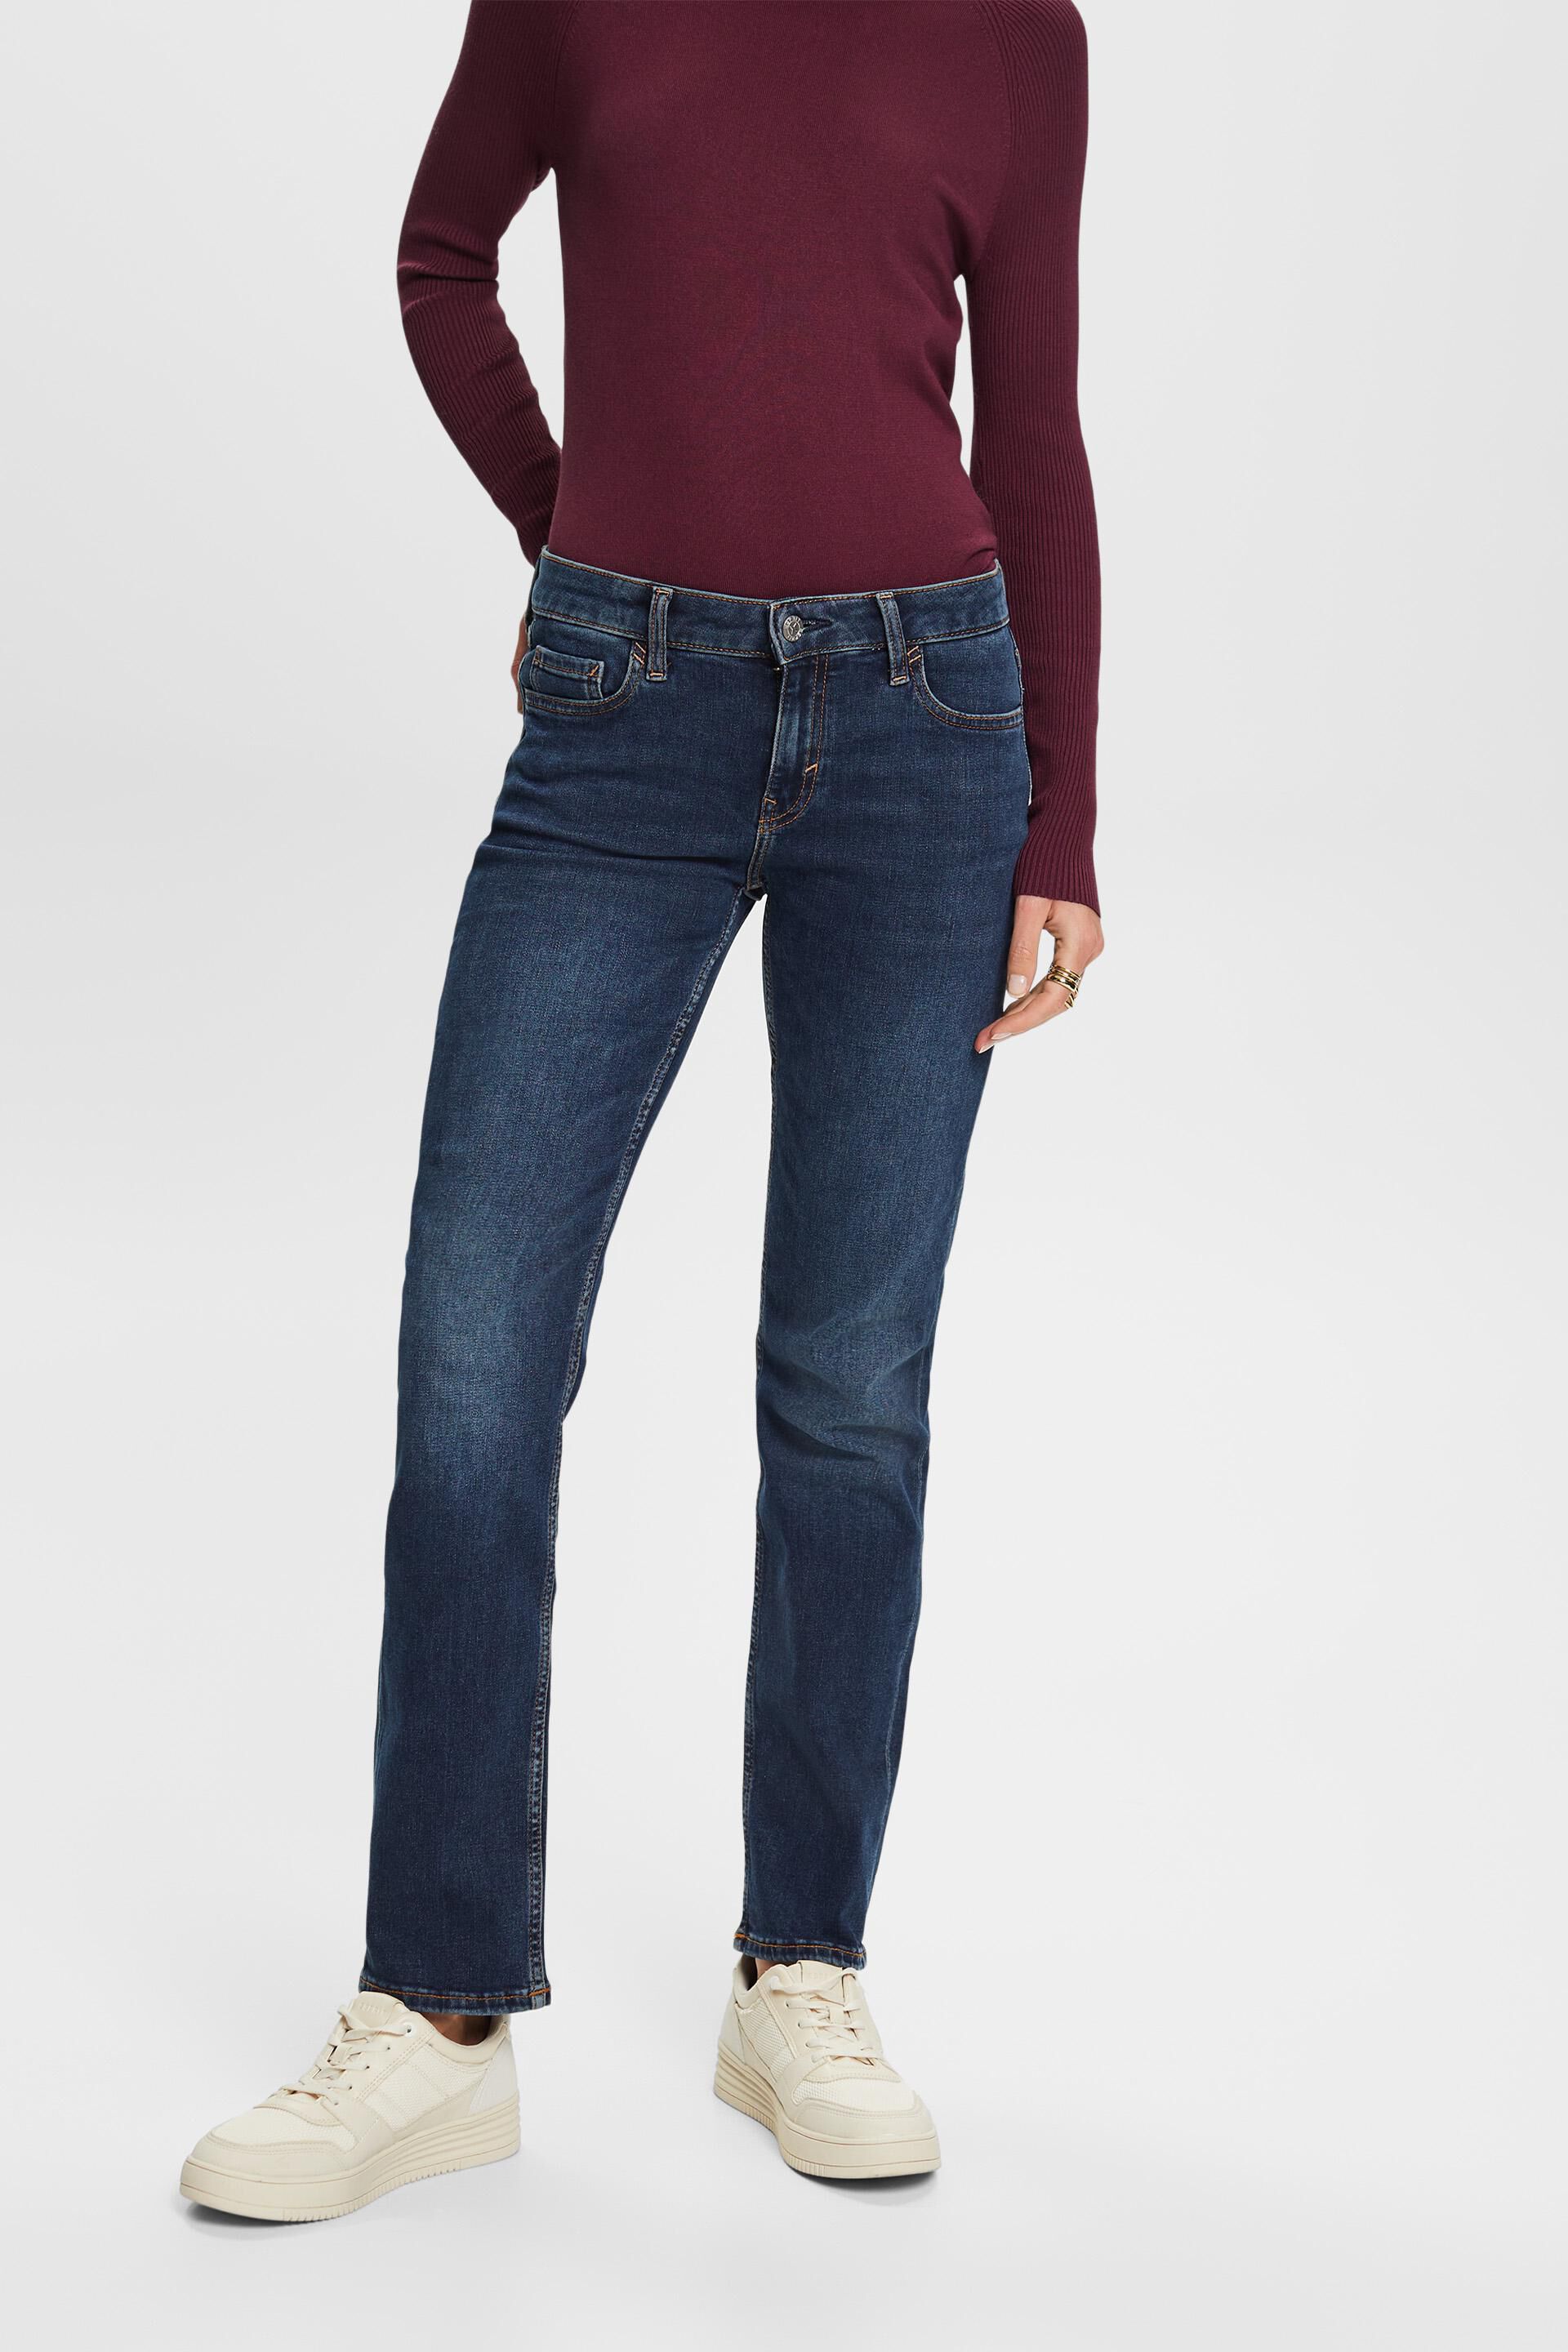 Esprit Damen Recycelt: Gerade Jeans mit mittelhohem Bund